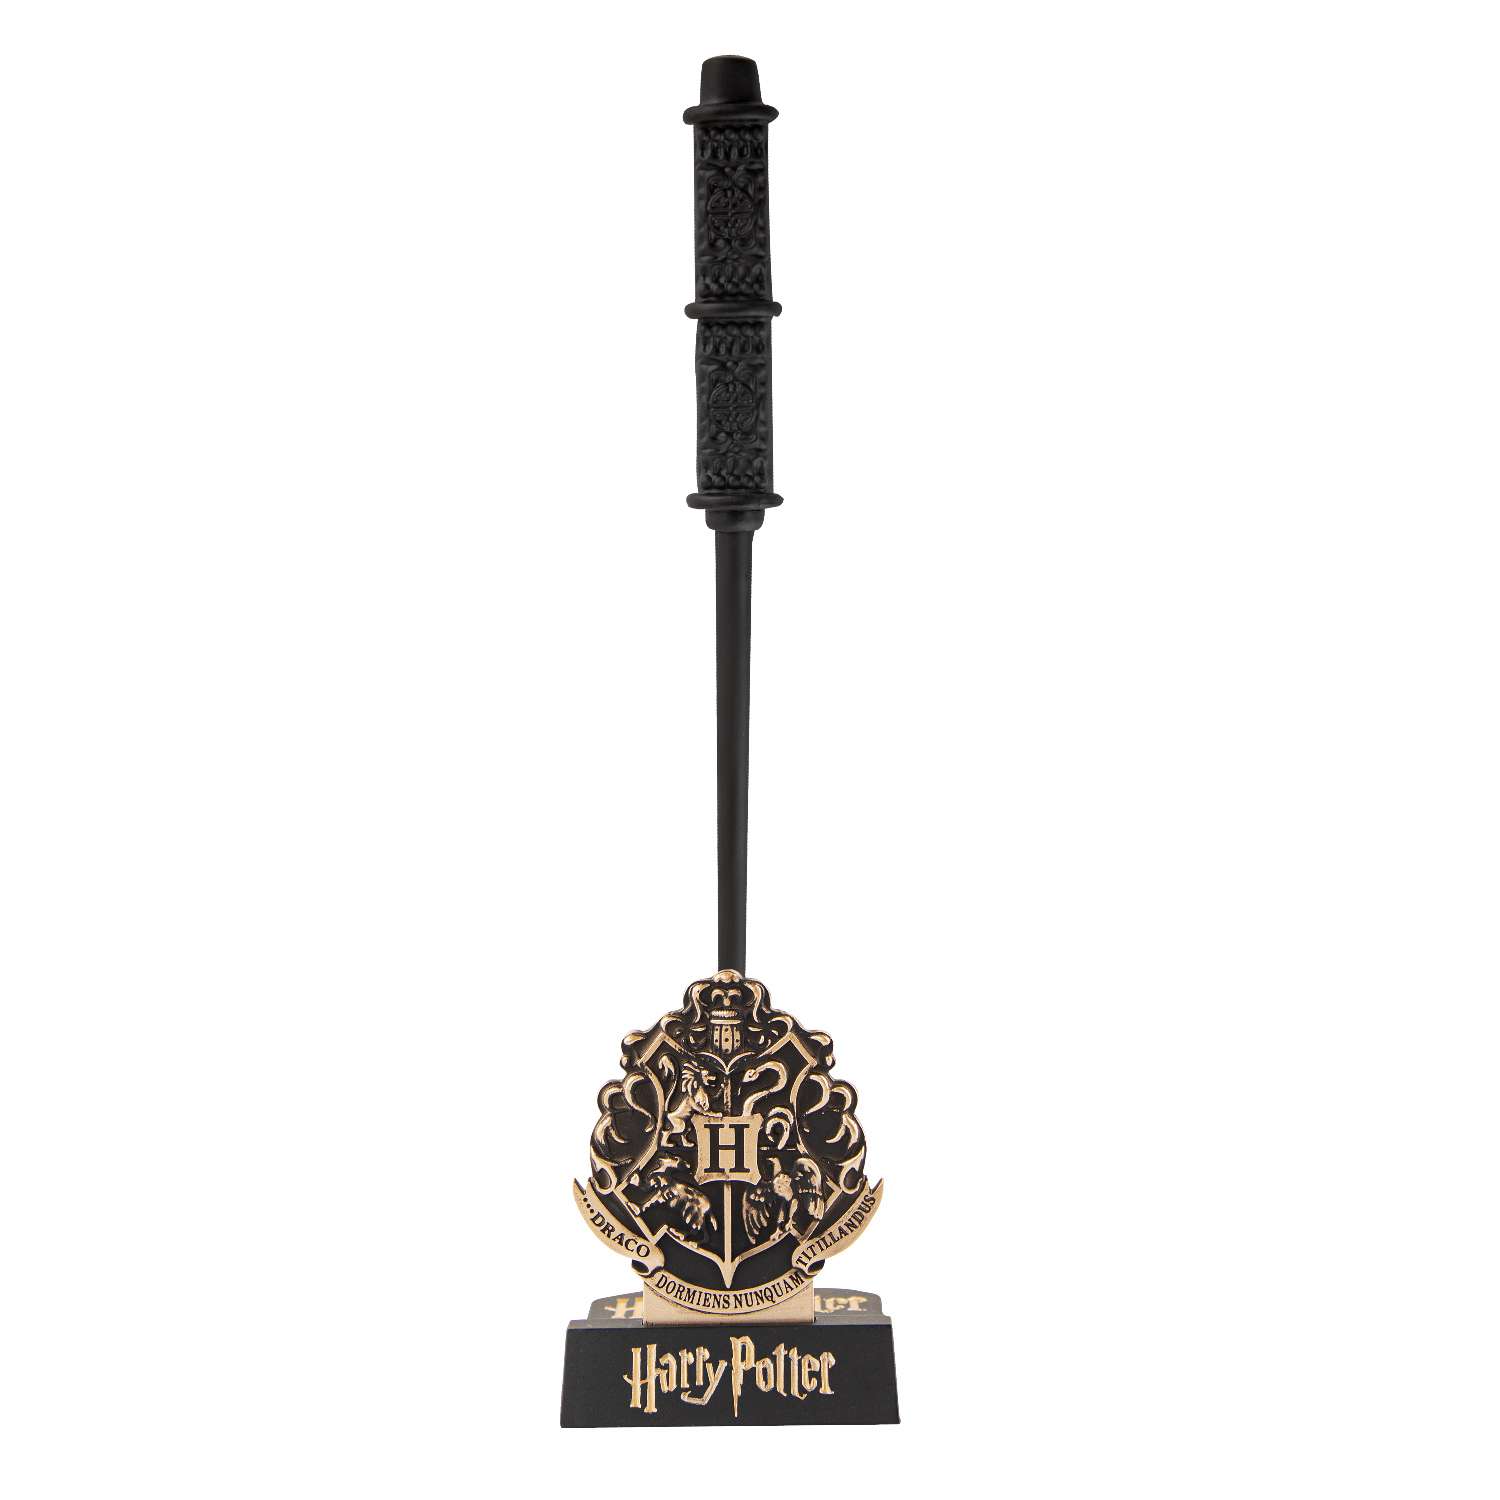 Ручка Harry Potter в виде палочки Северуса Снейпа 25 см с подставкой и закладкой - фото 6